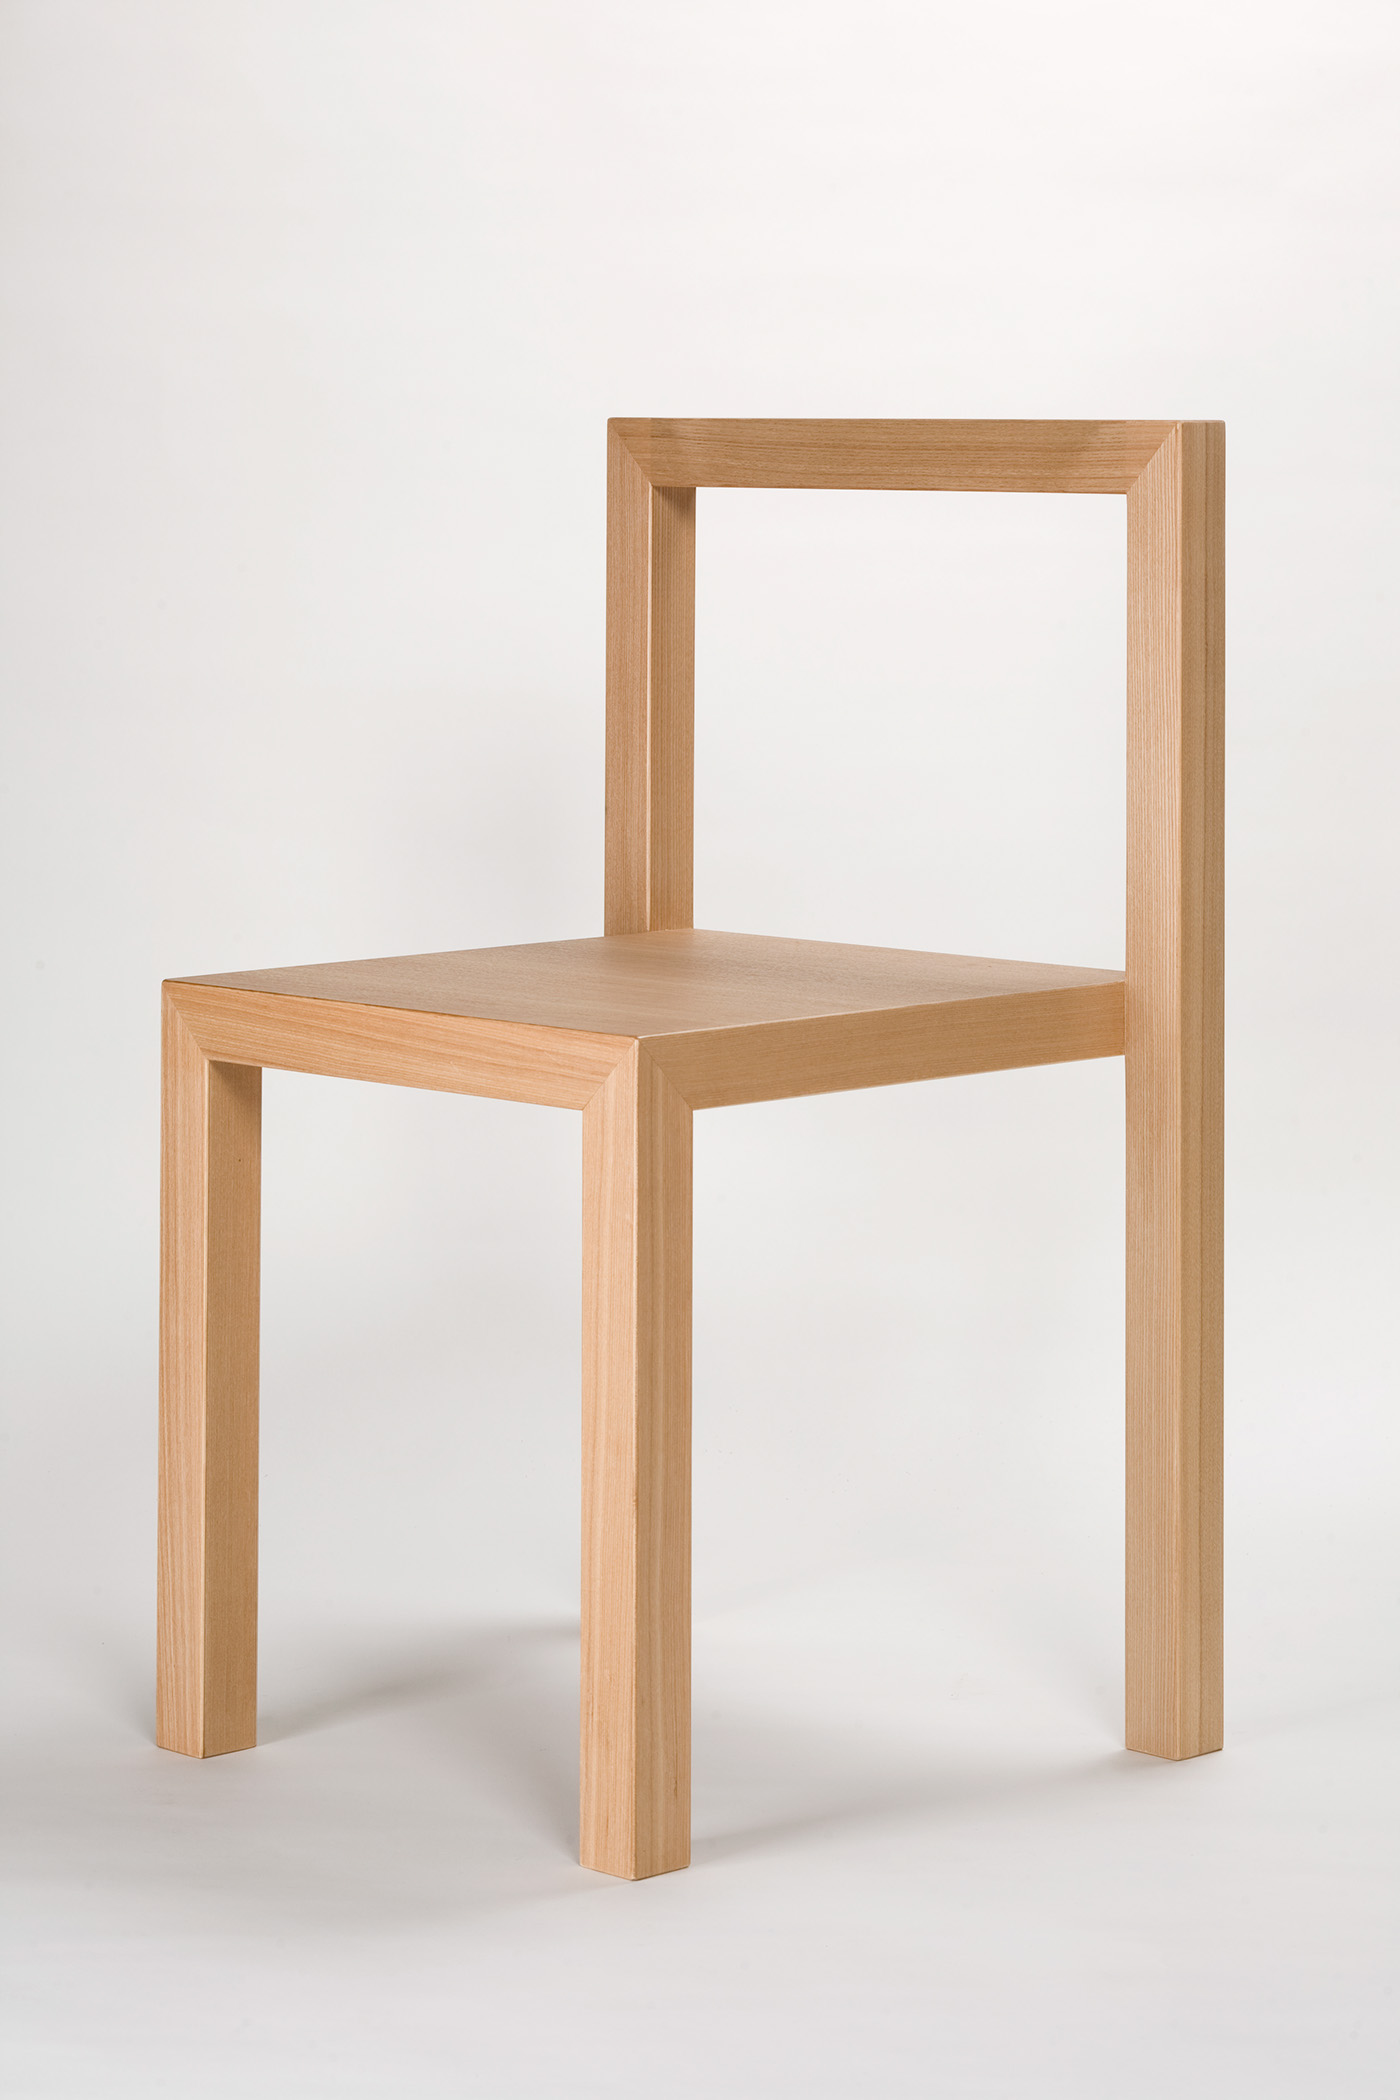 furniture chair desk japanese craftsmanship wood manufacture table stool flexible